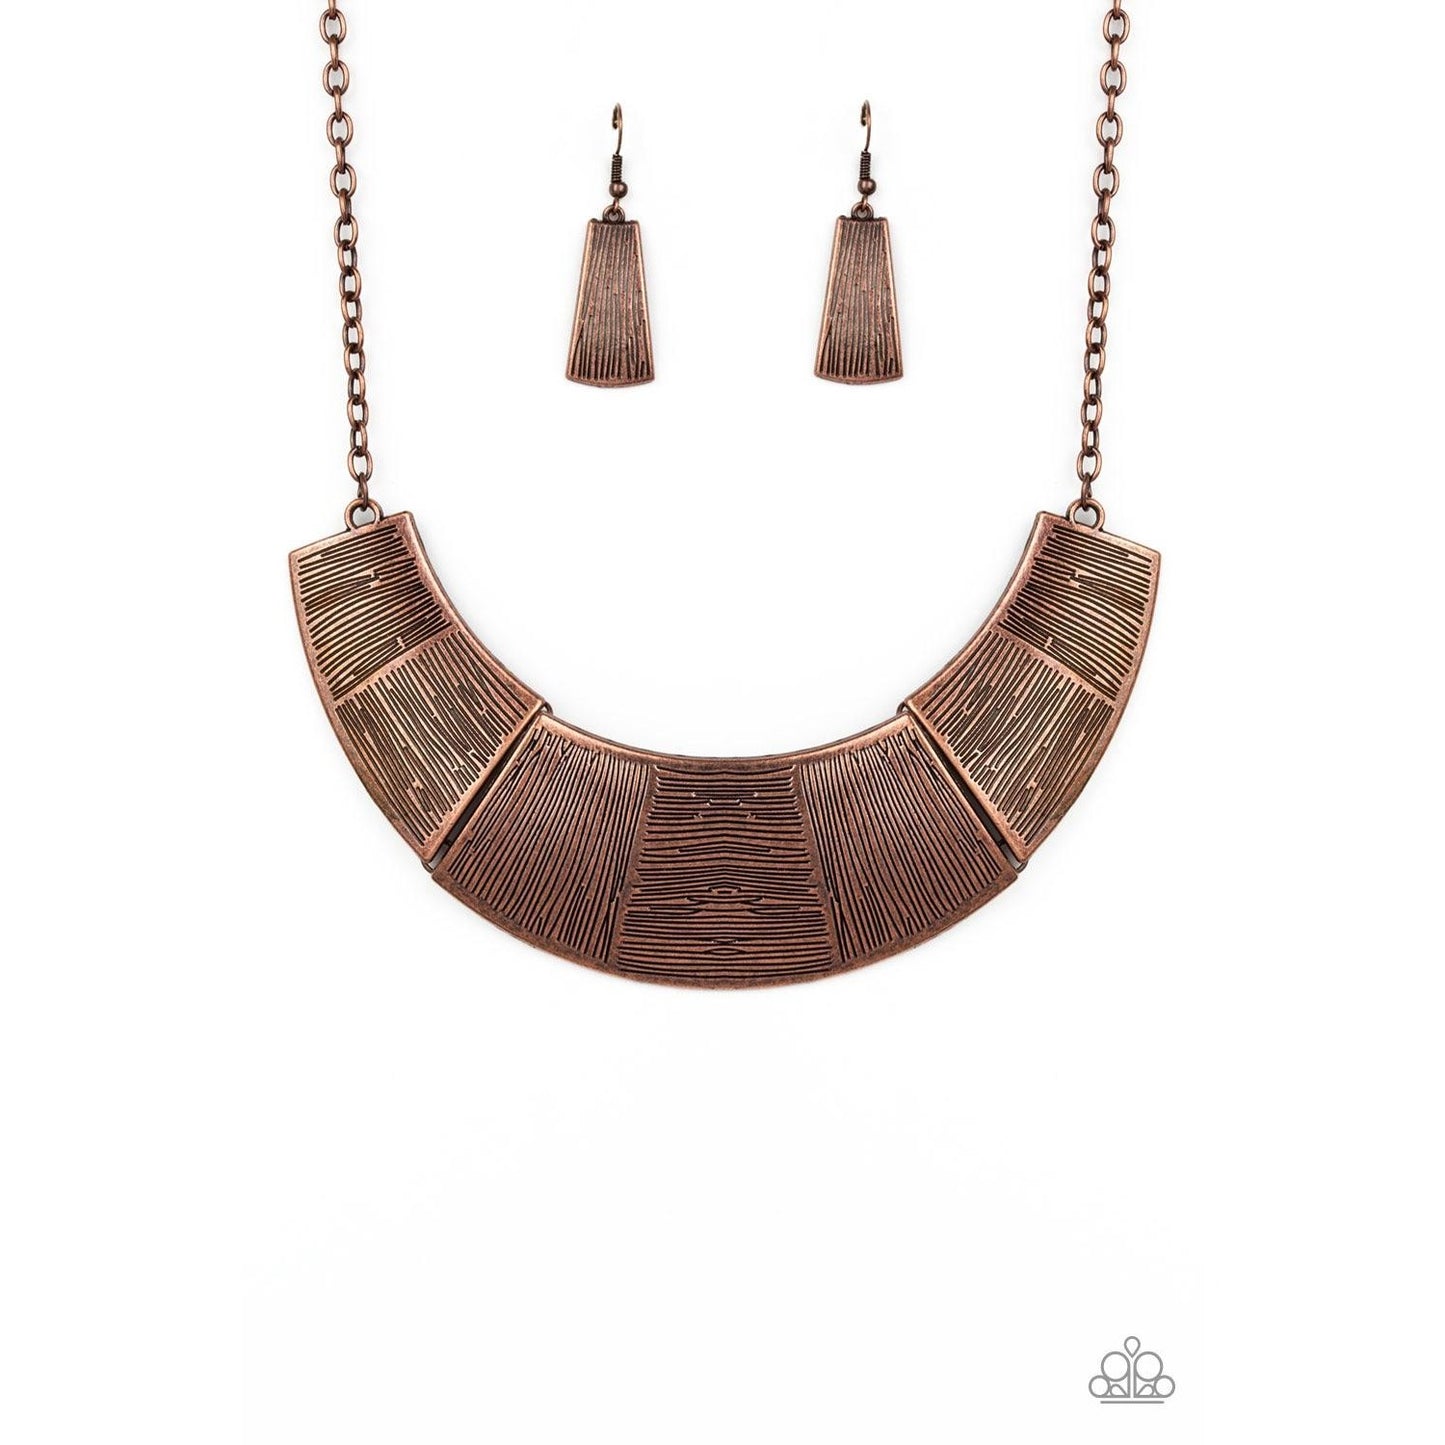 More Roar – Copper Necklace